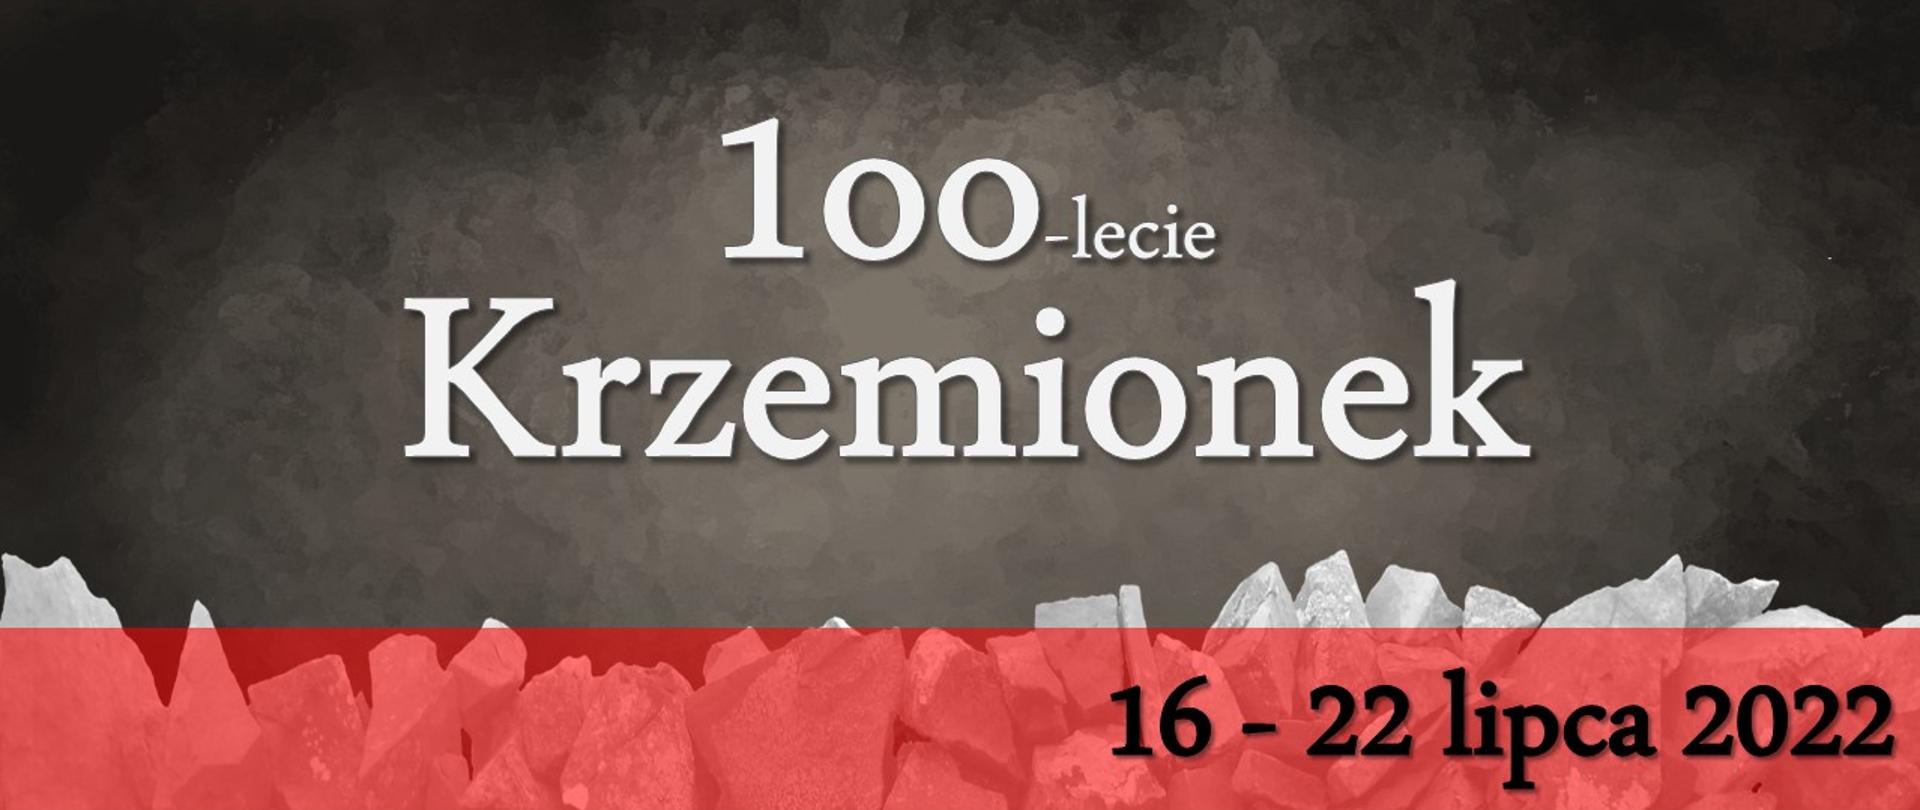 100-lecie Krzemionek